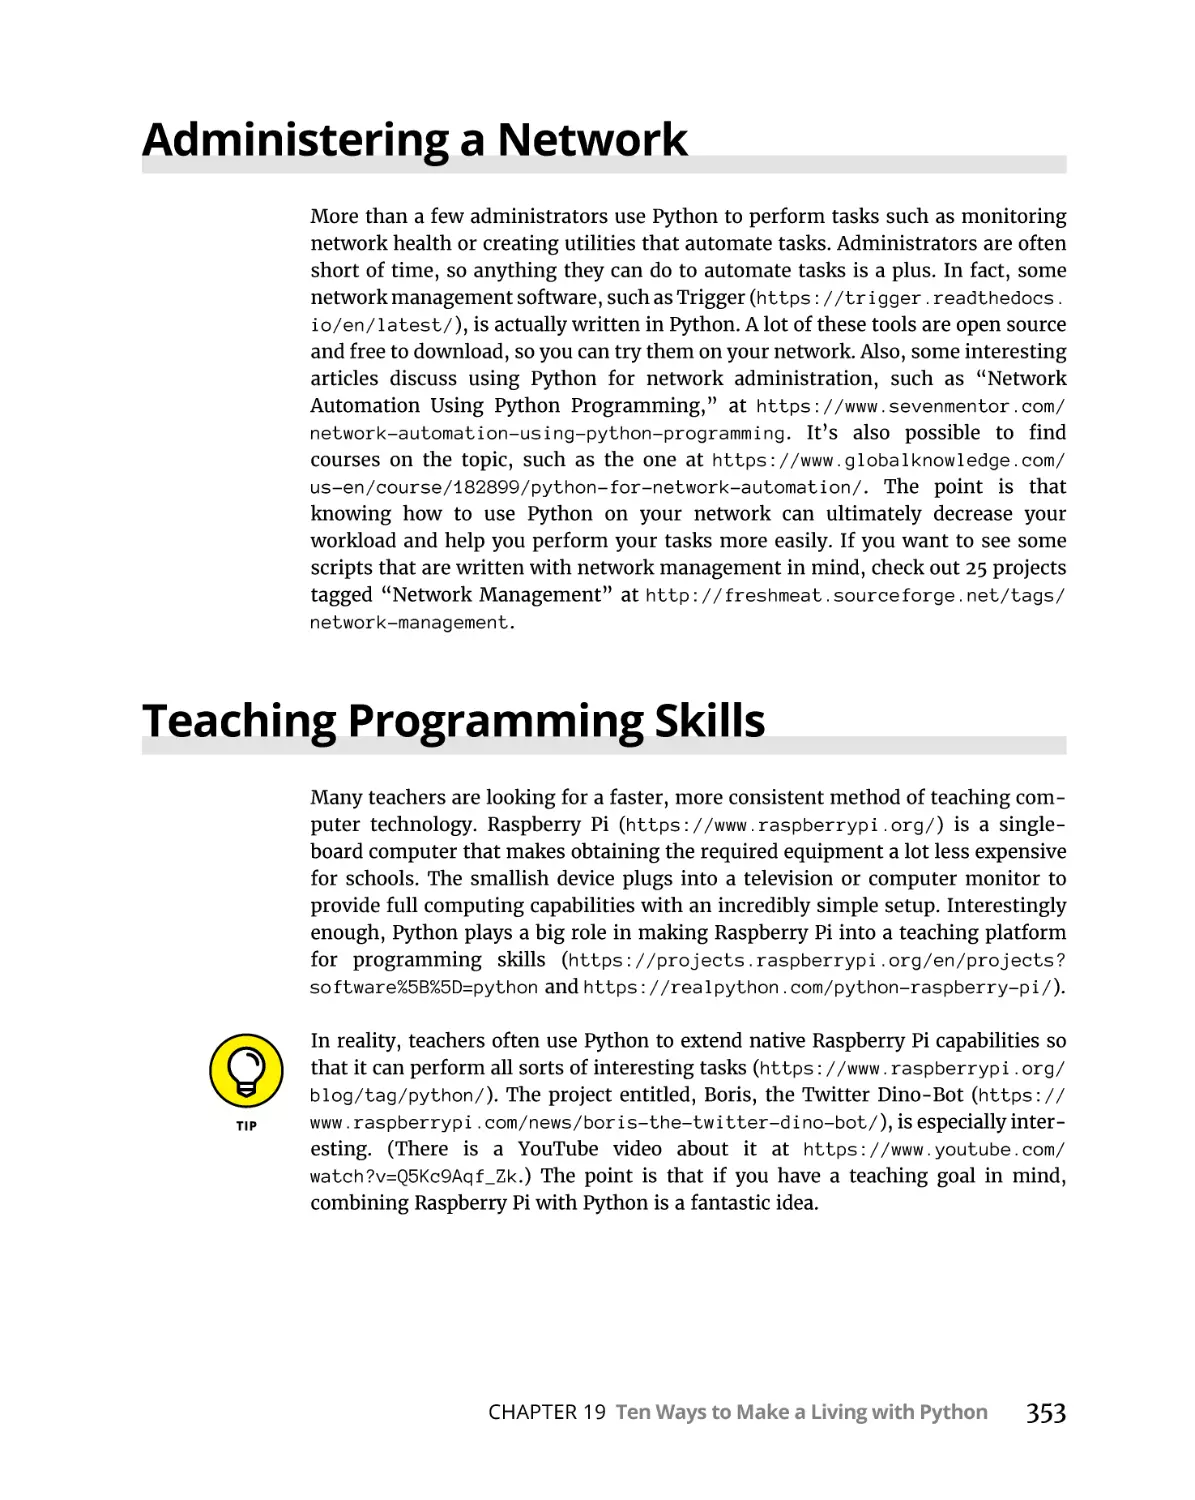 Administering a Network
Teaching Programming Skills